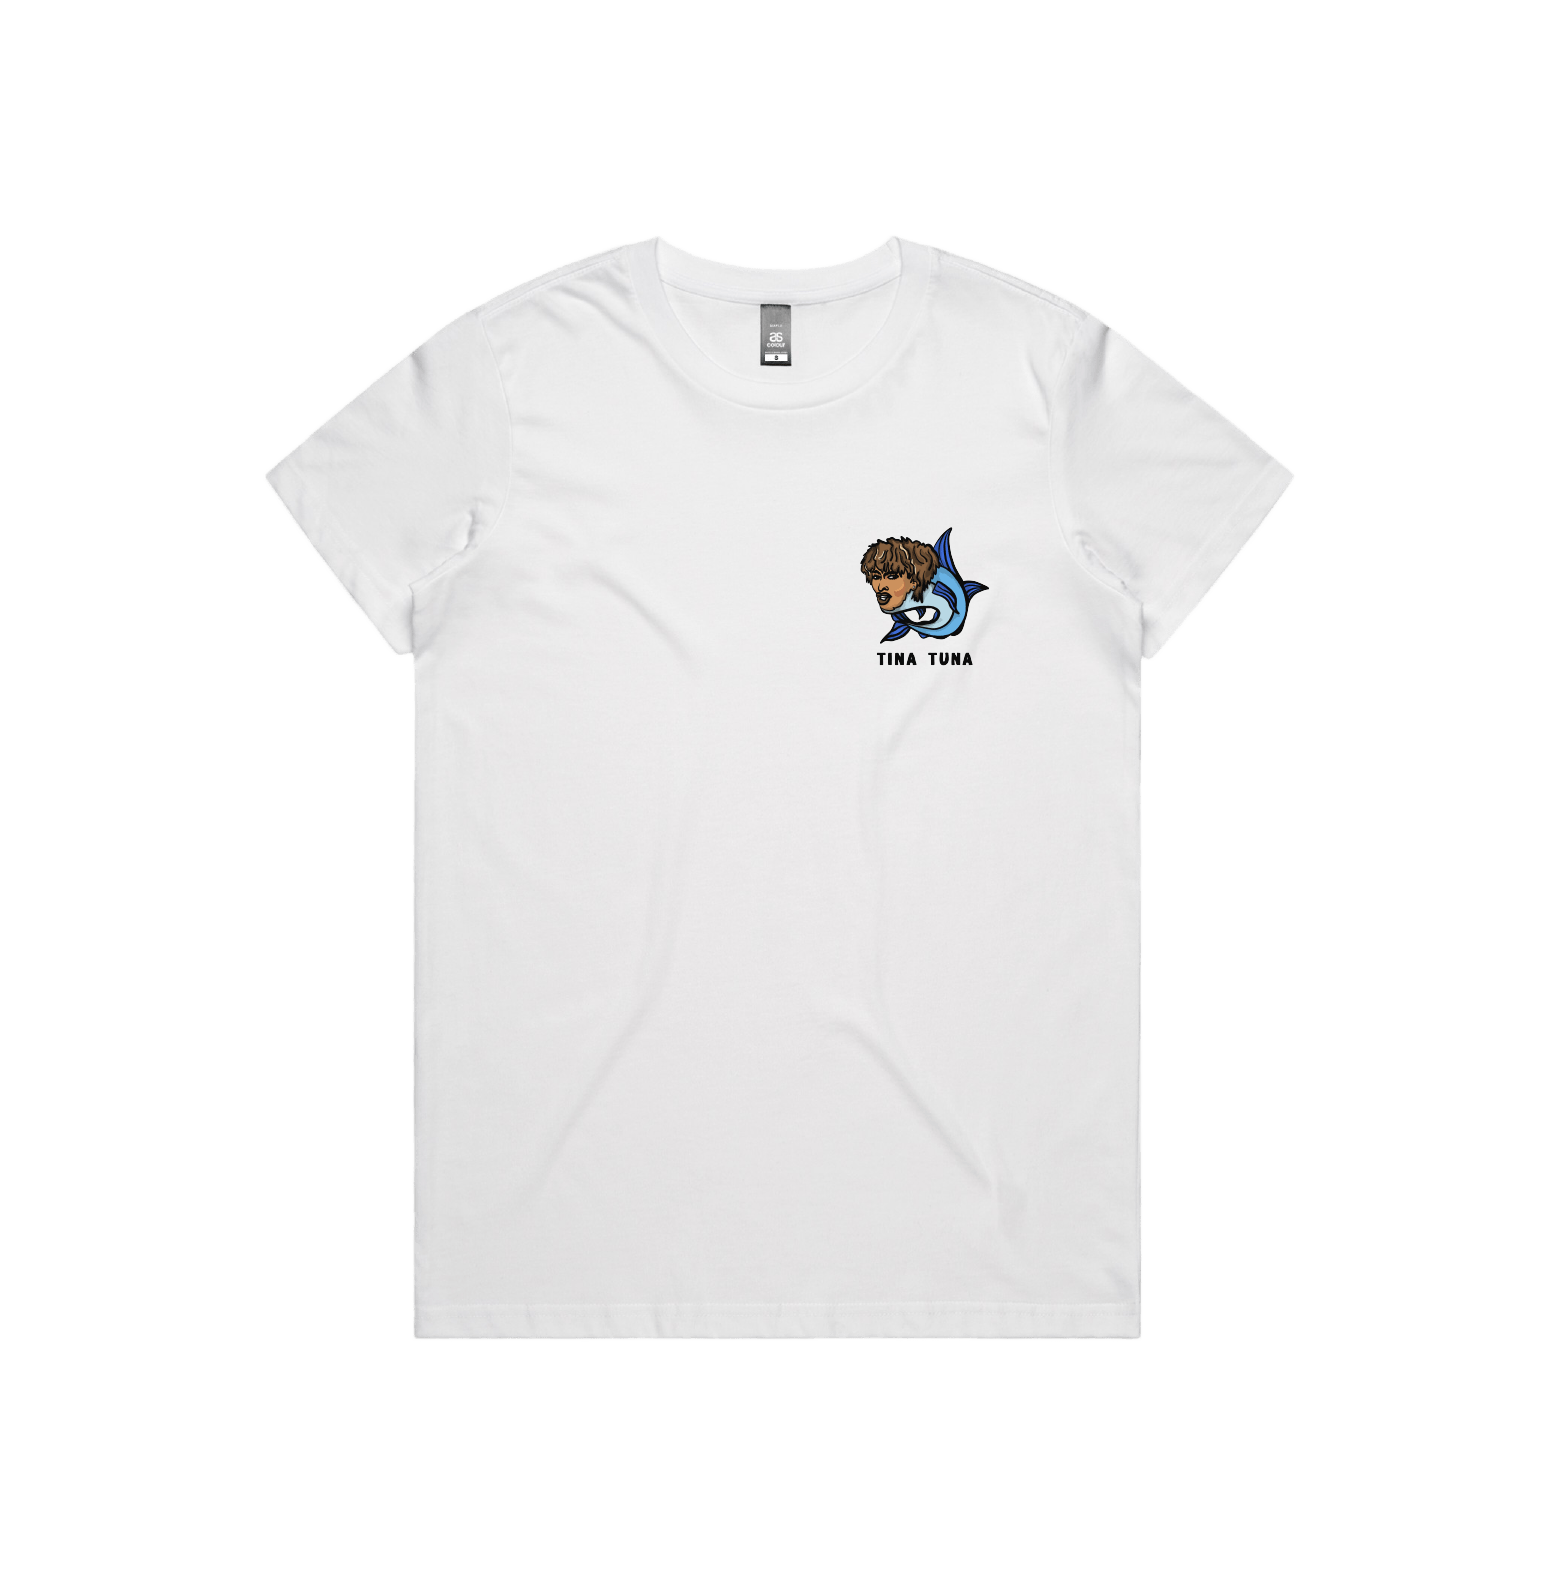 XS / White / Small Front Design Tina Tuna 🐟 - Women's T Shirt